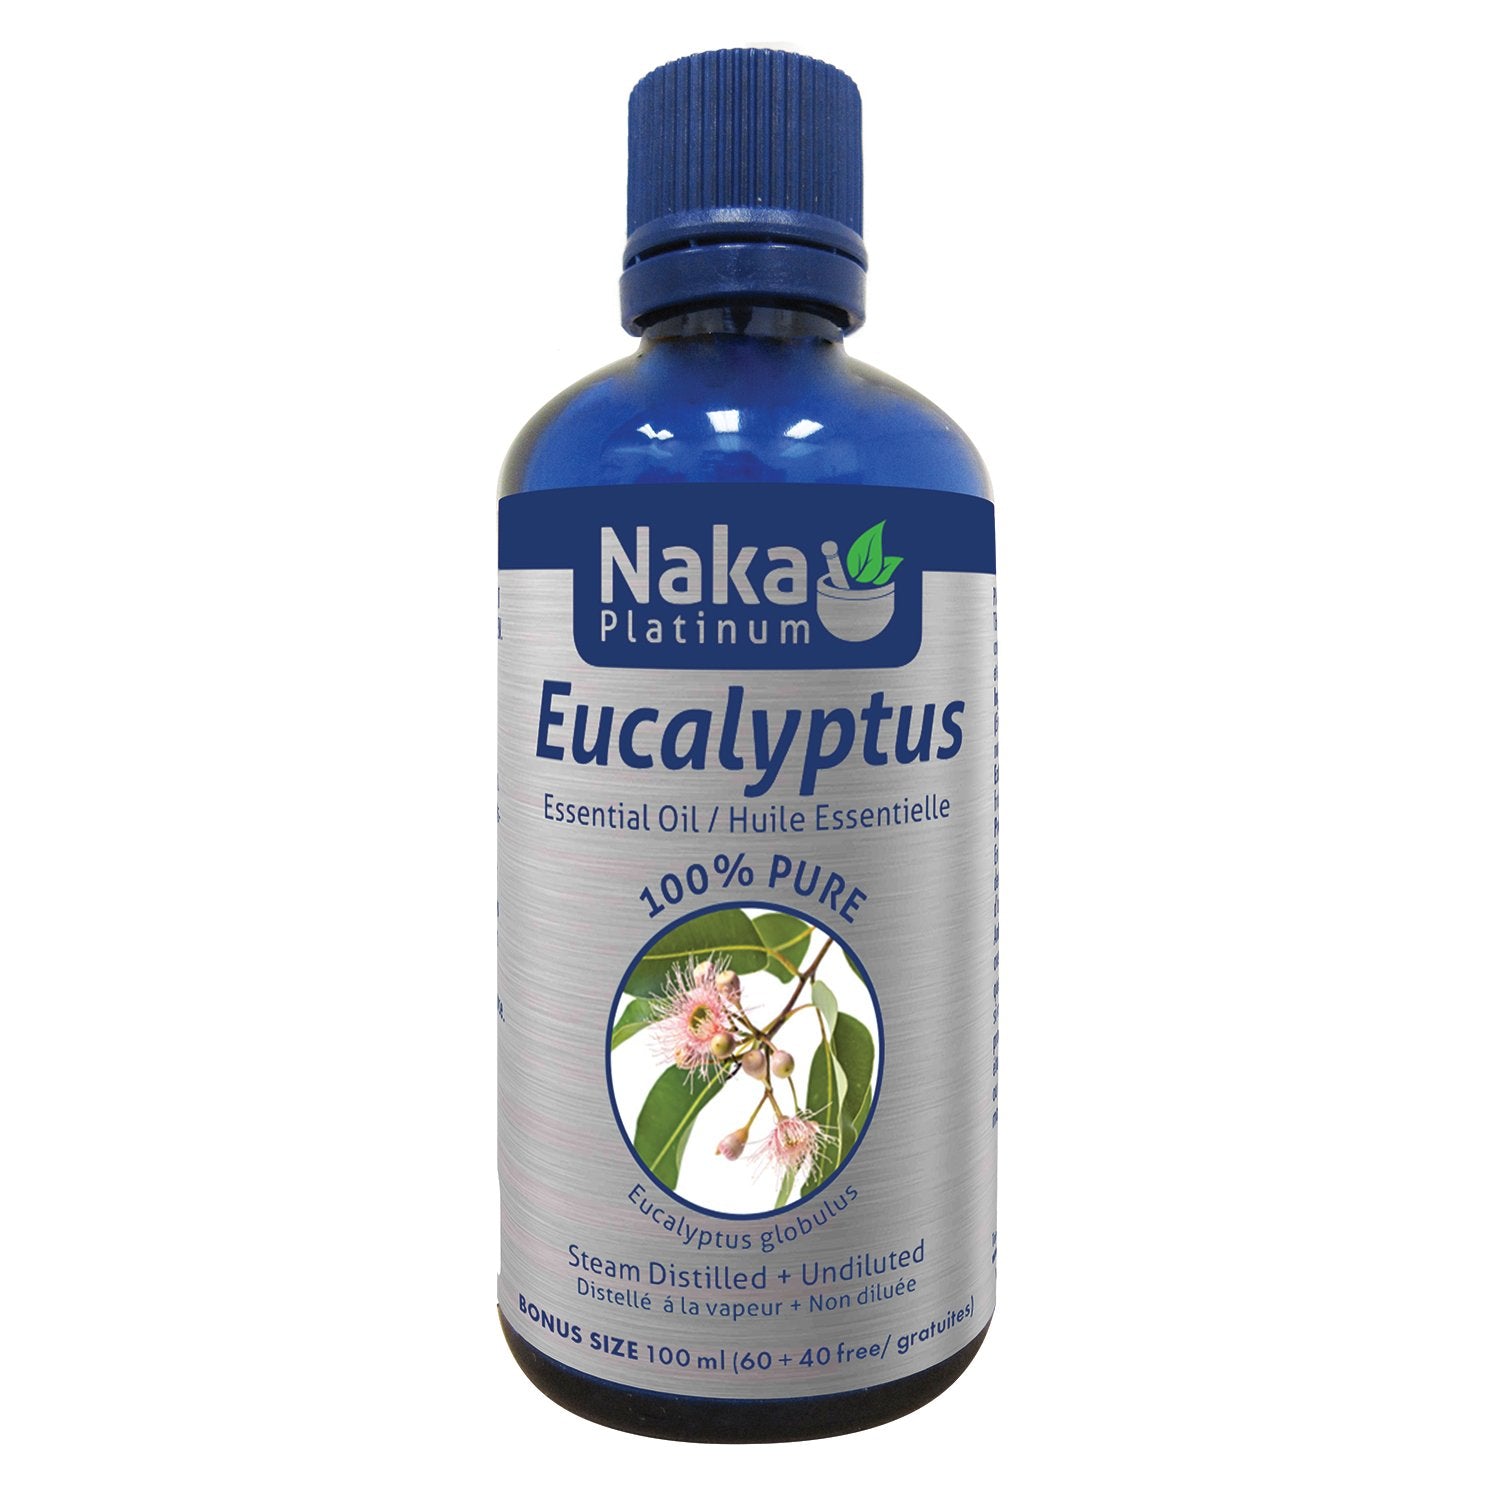 Naka - Eucalyptus Essential Oil